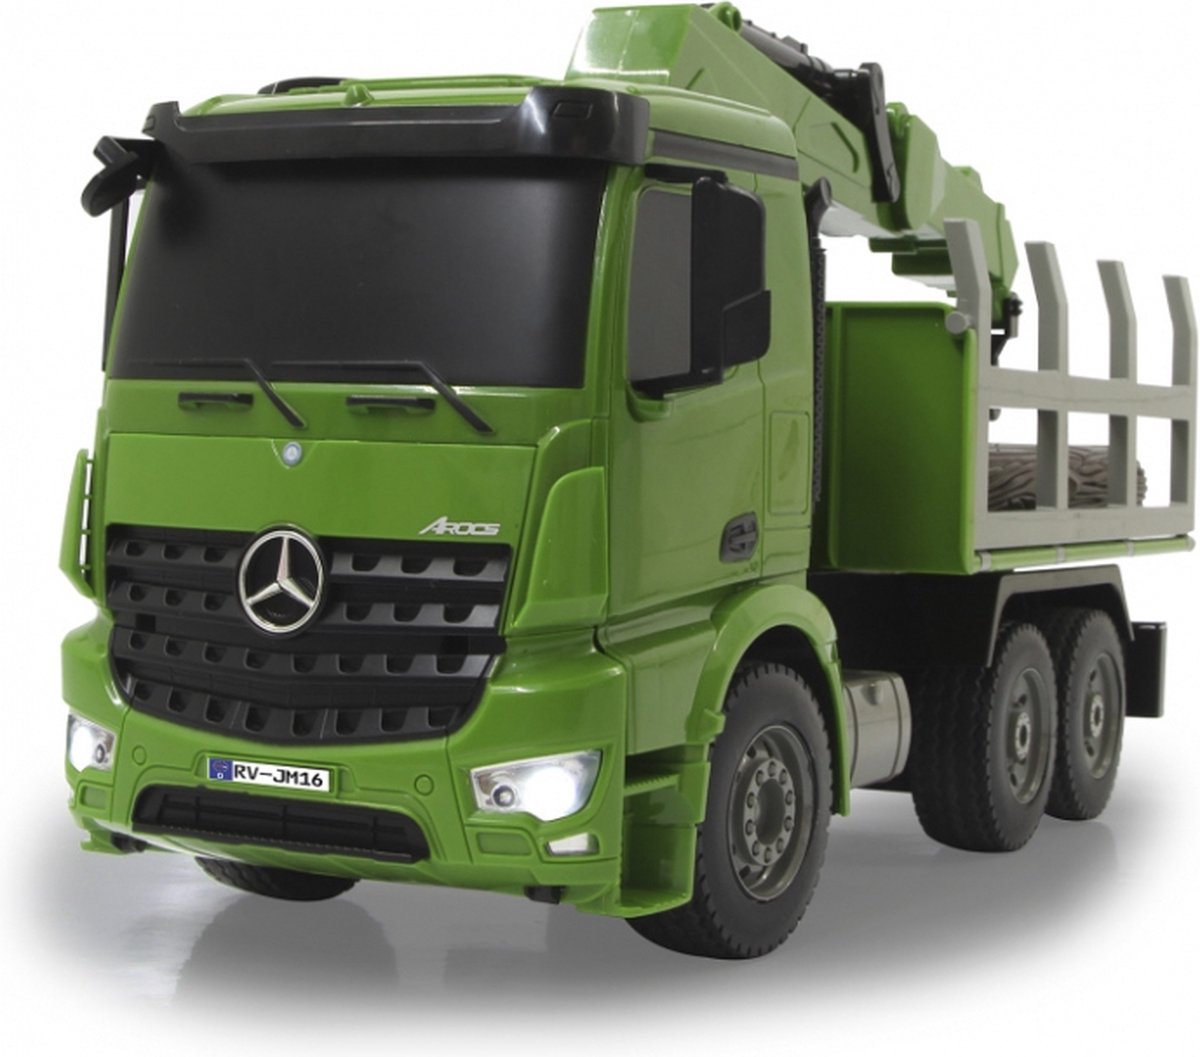 Camion télécommandé Show Truck Mercedes Benz Actros Dino Express